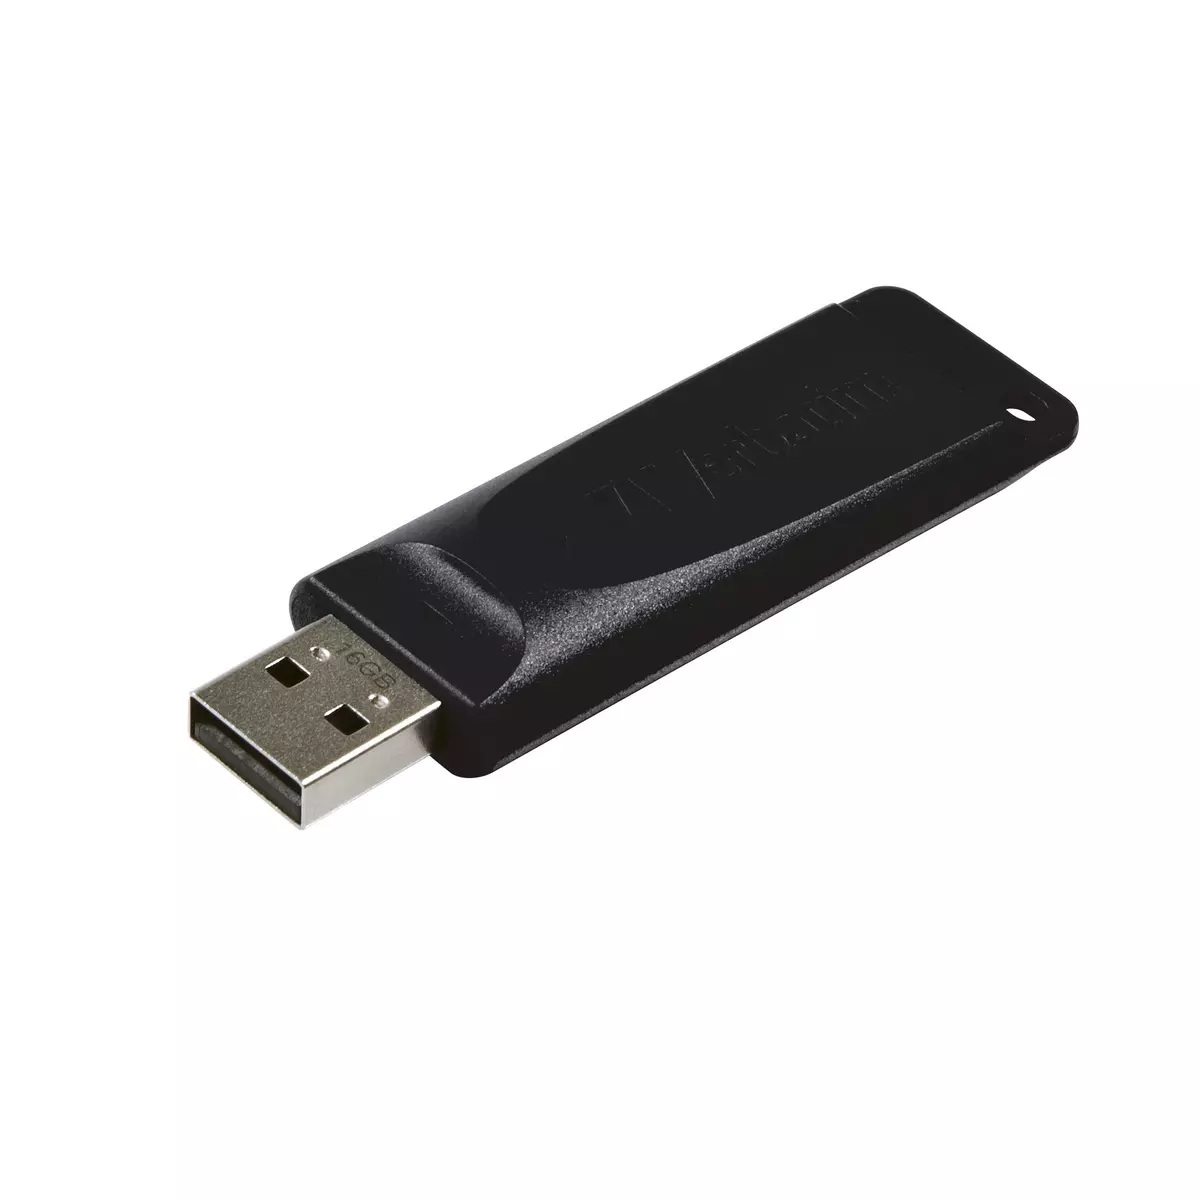 VERBATIM Clé USB Sore'n'Go Slider - USB 2.0 - 16 Go